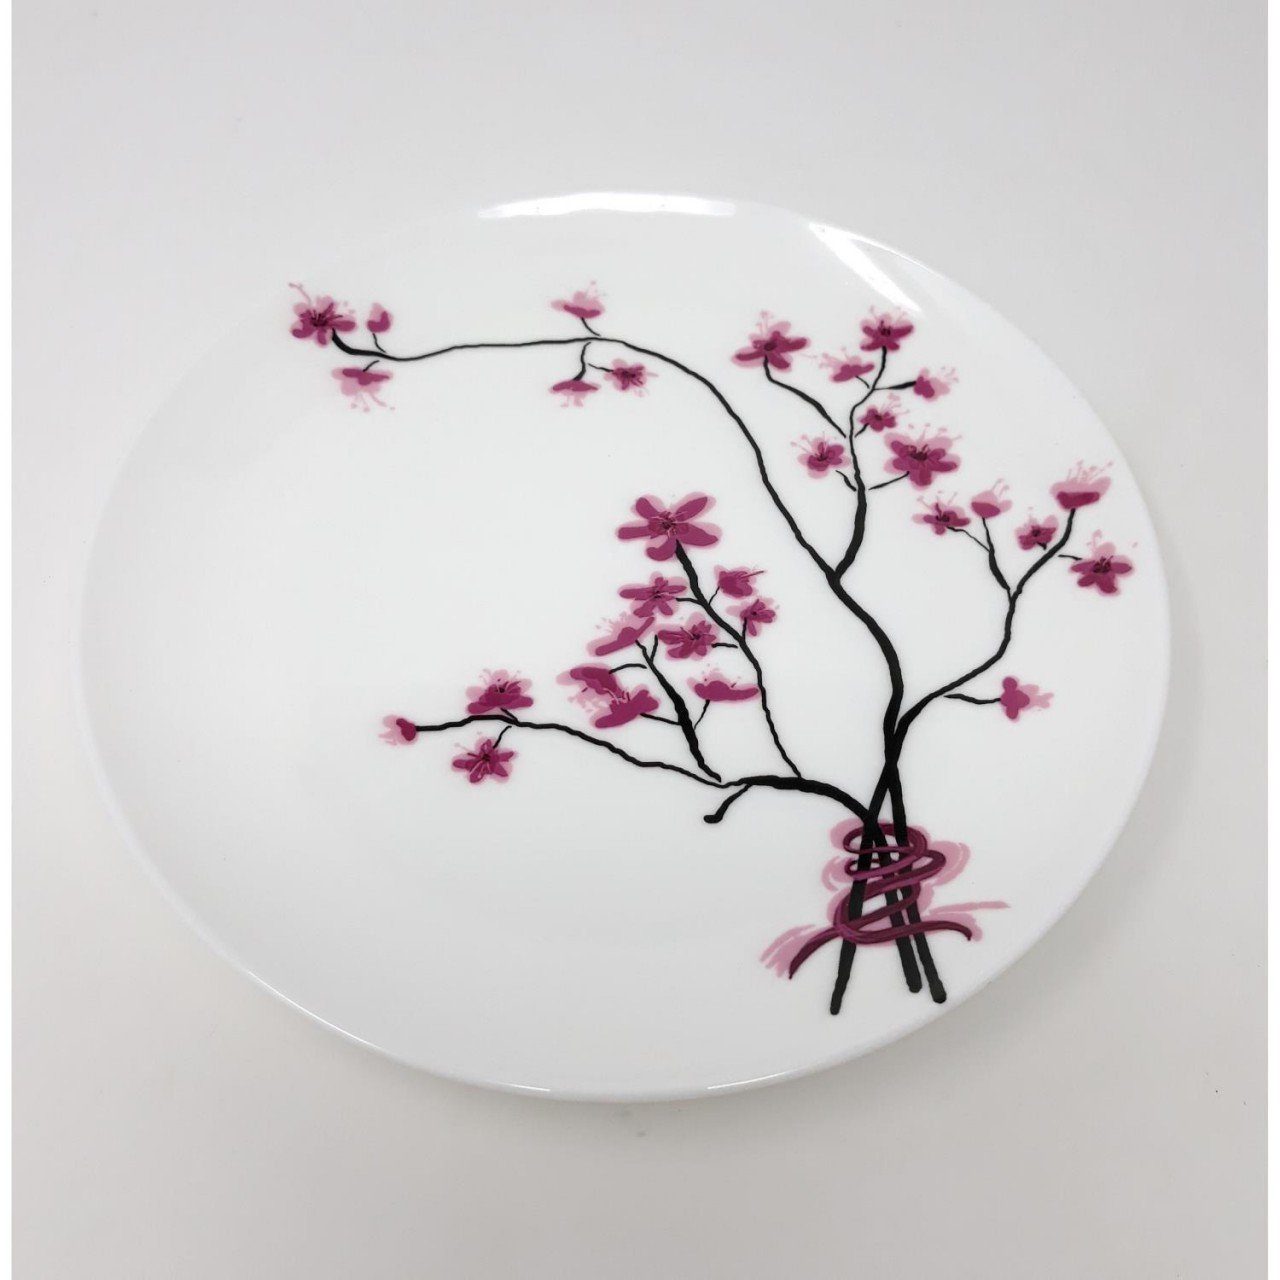 TeaLogic Dessertteller Cherry Blossom, Weiß D:19cm Porzellan